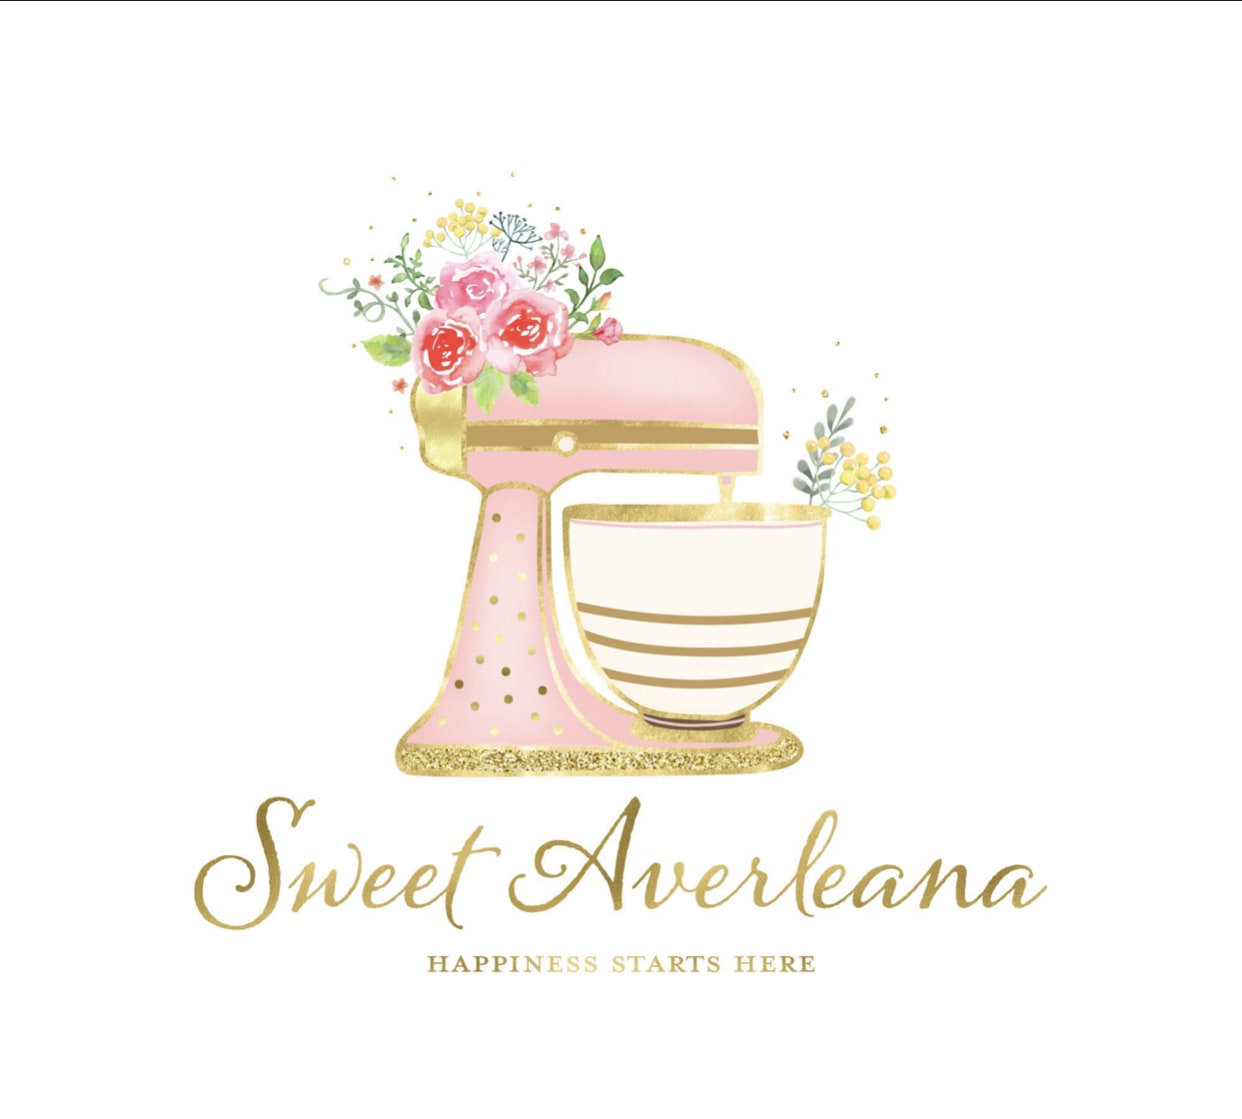 Sweet Averleana